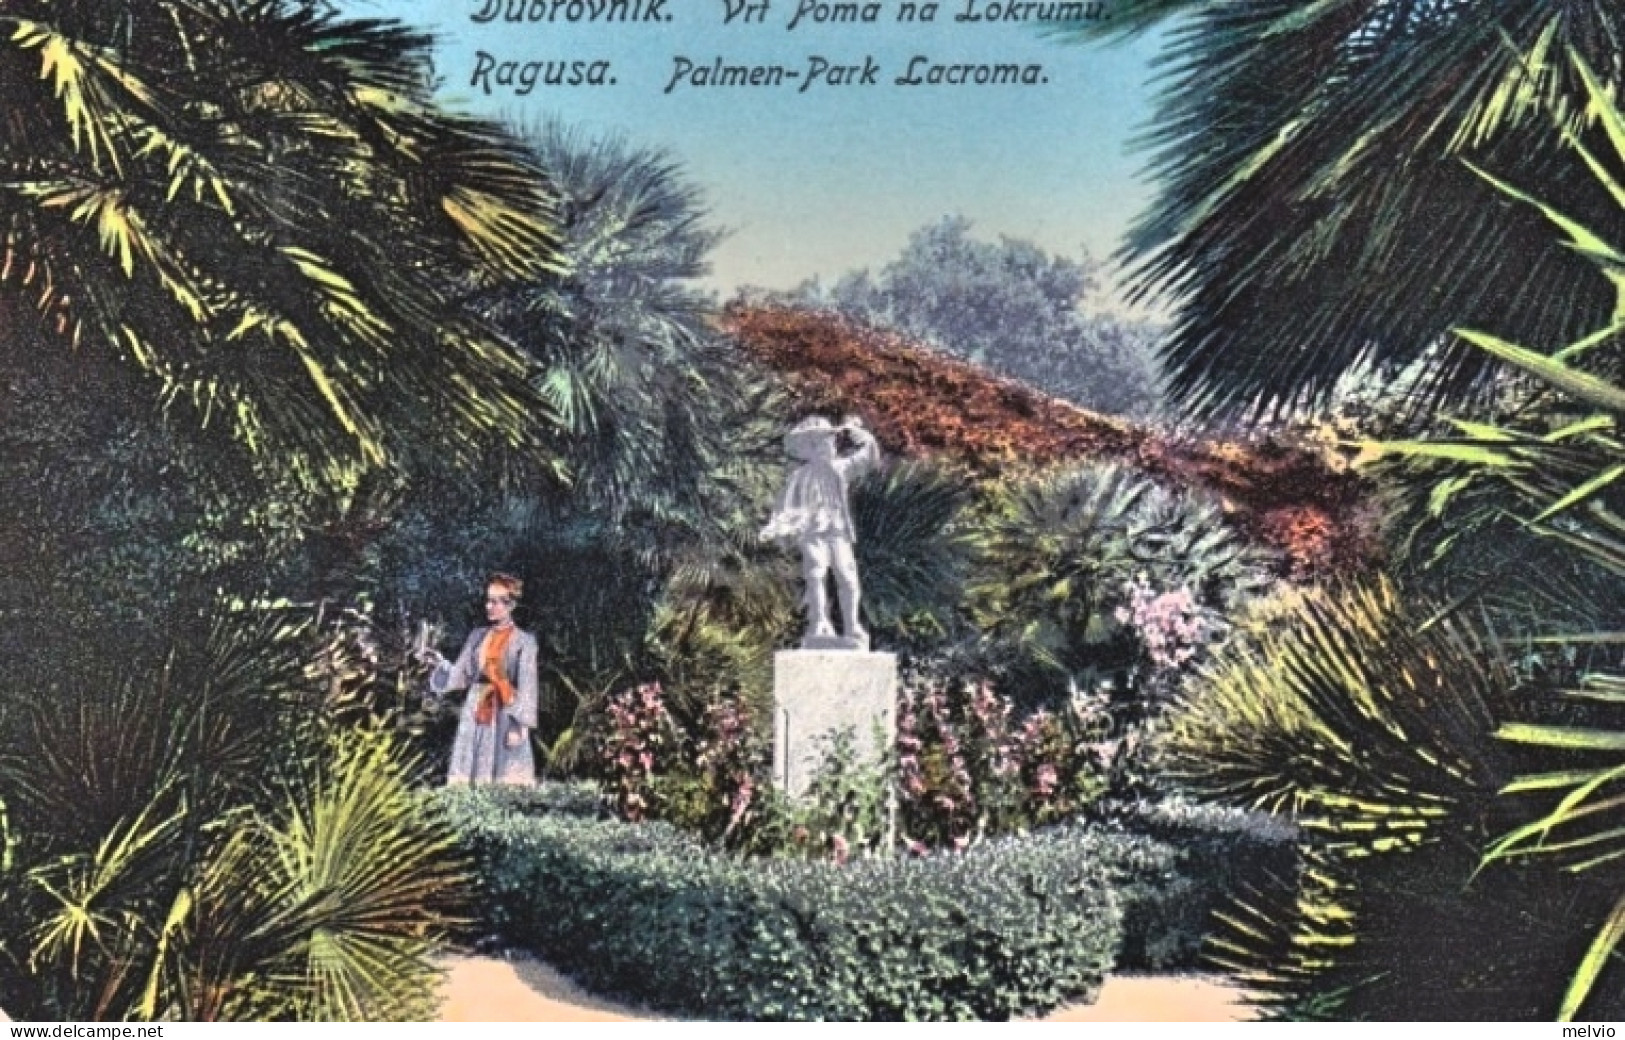 1914-Dubrovnik Vrt Poma Na Lokrumu-Ragusa Palmen Park Lacroma, Cartolina Viaggia - Croacia